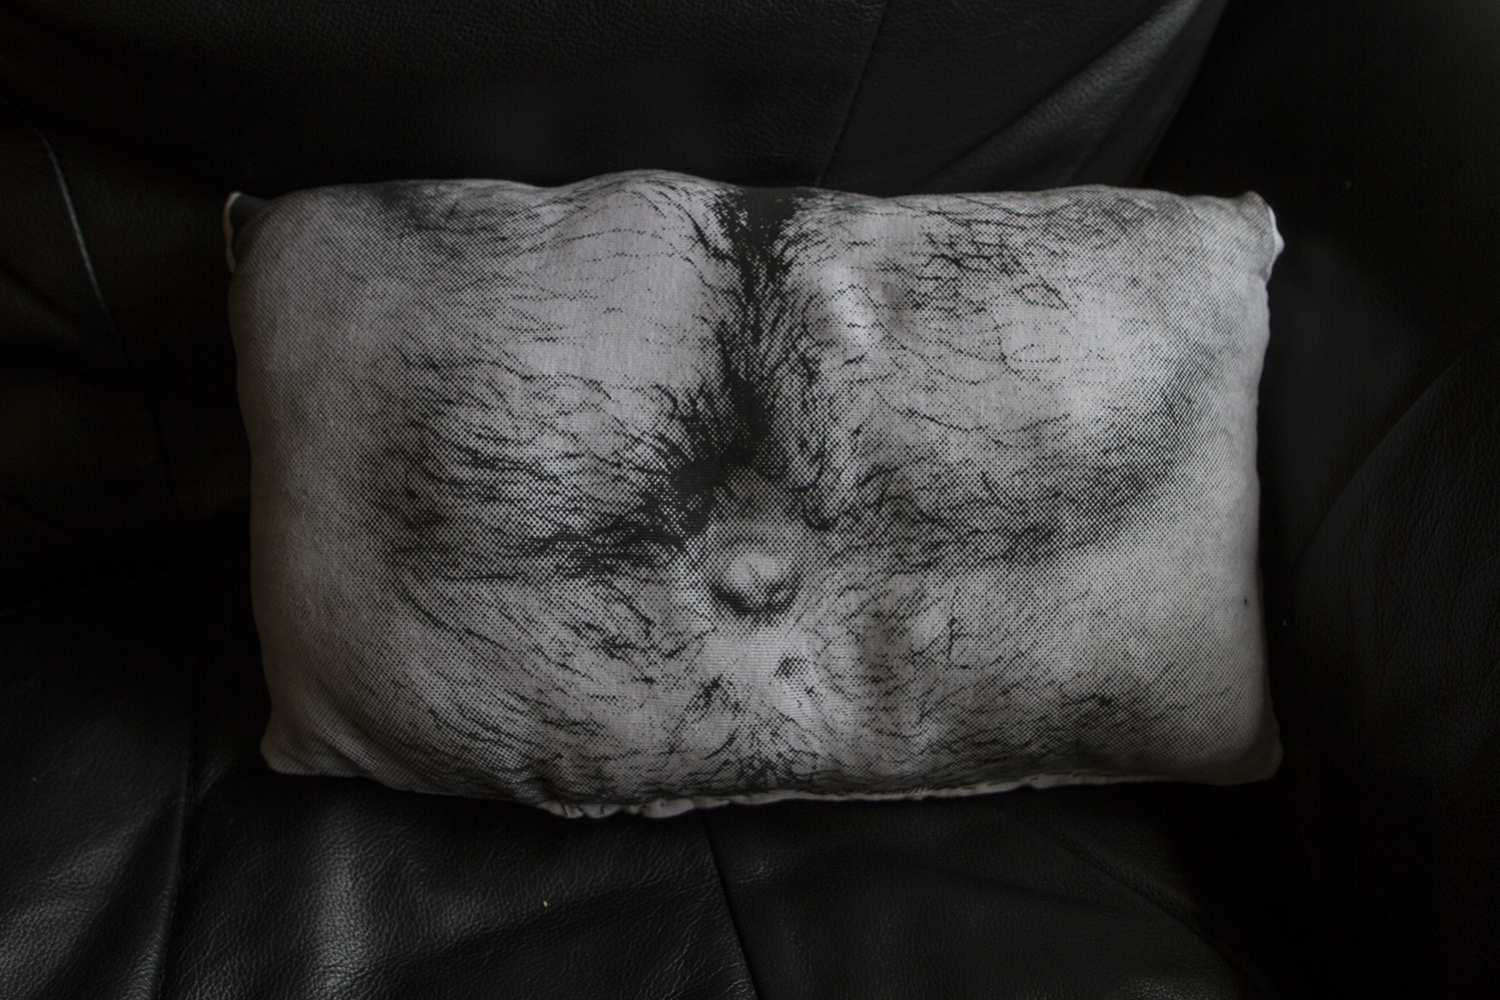 Belly Pillow, 2012, screenprint on fabric